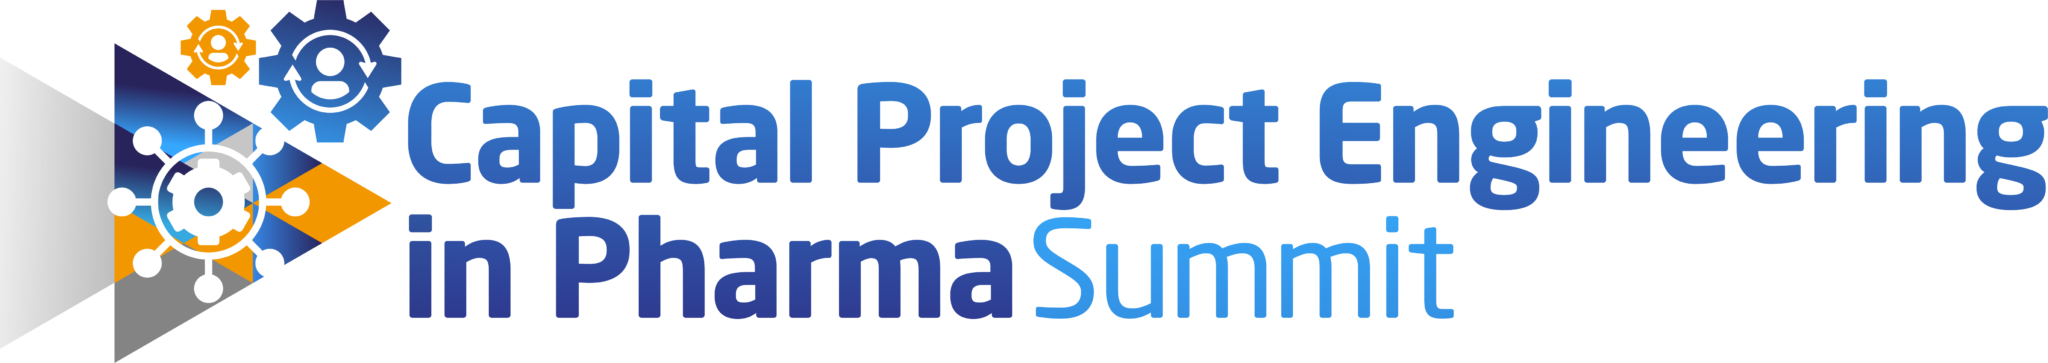 Capital-Project-Engineering-in-Pharma-Summit-logo